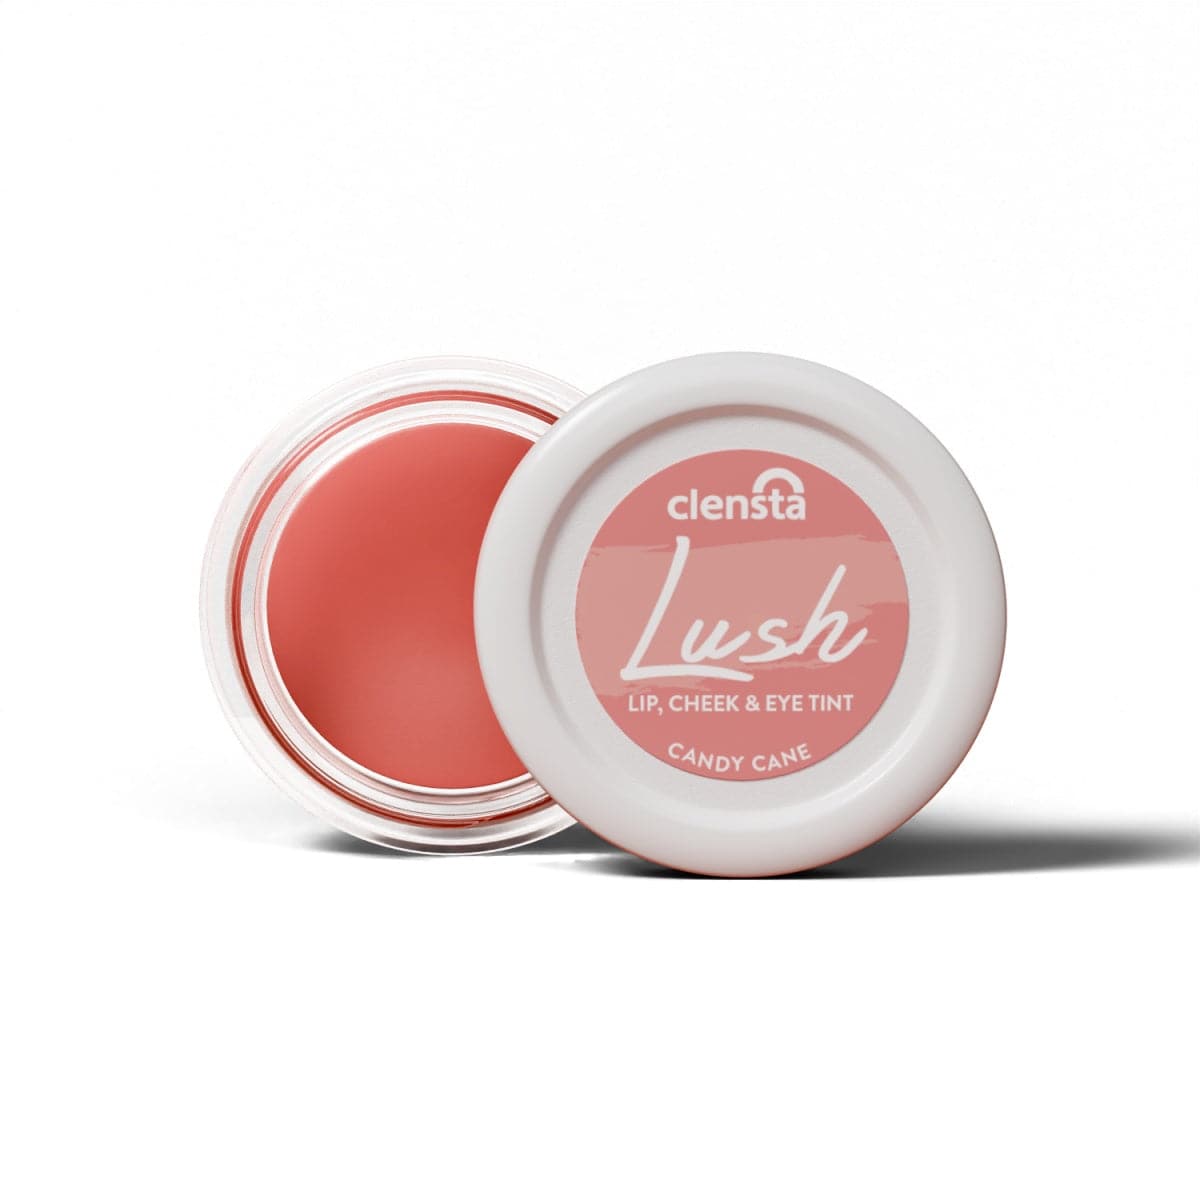 Lush Lip, Cheek & Eye Tint - Candy Cane